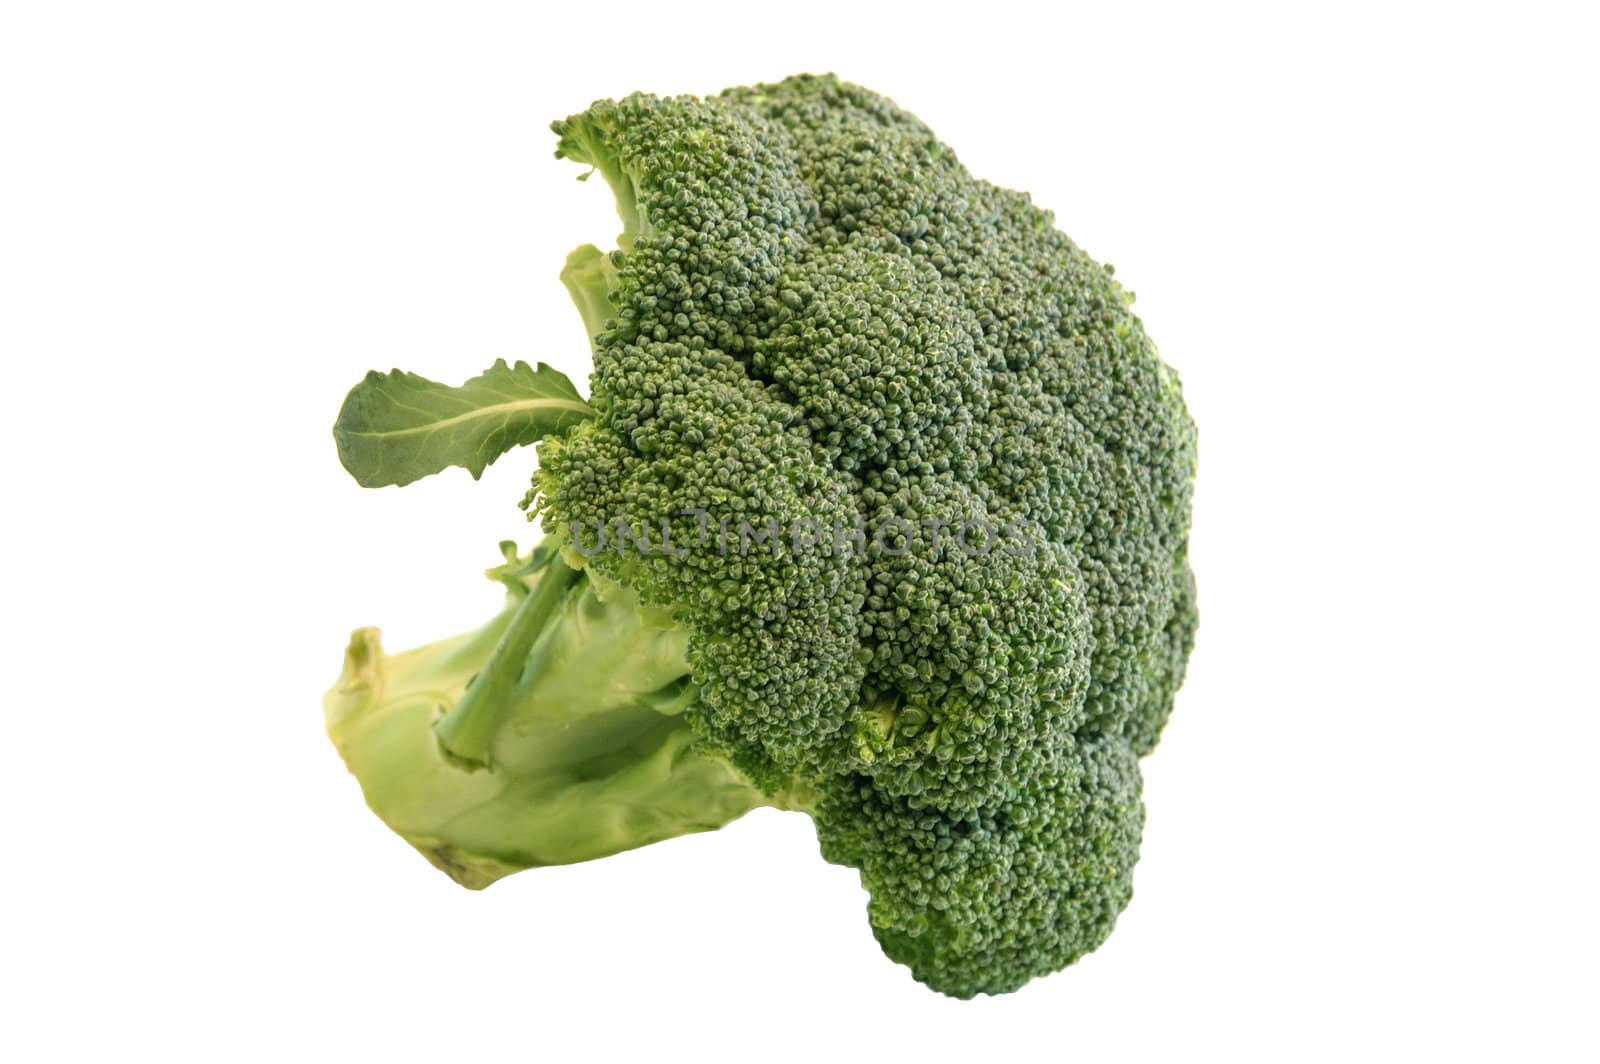 Broccoli by zenpix